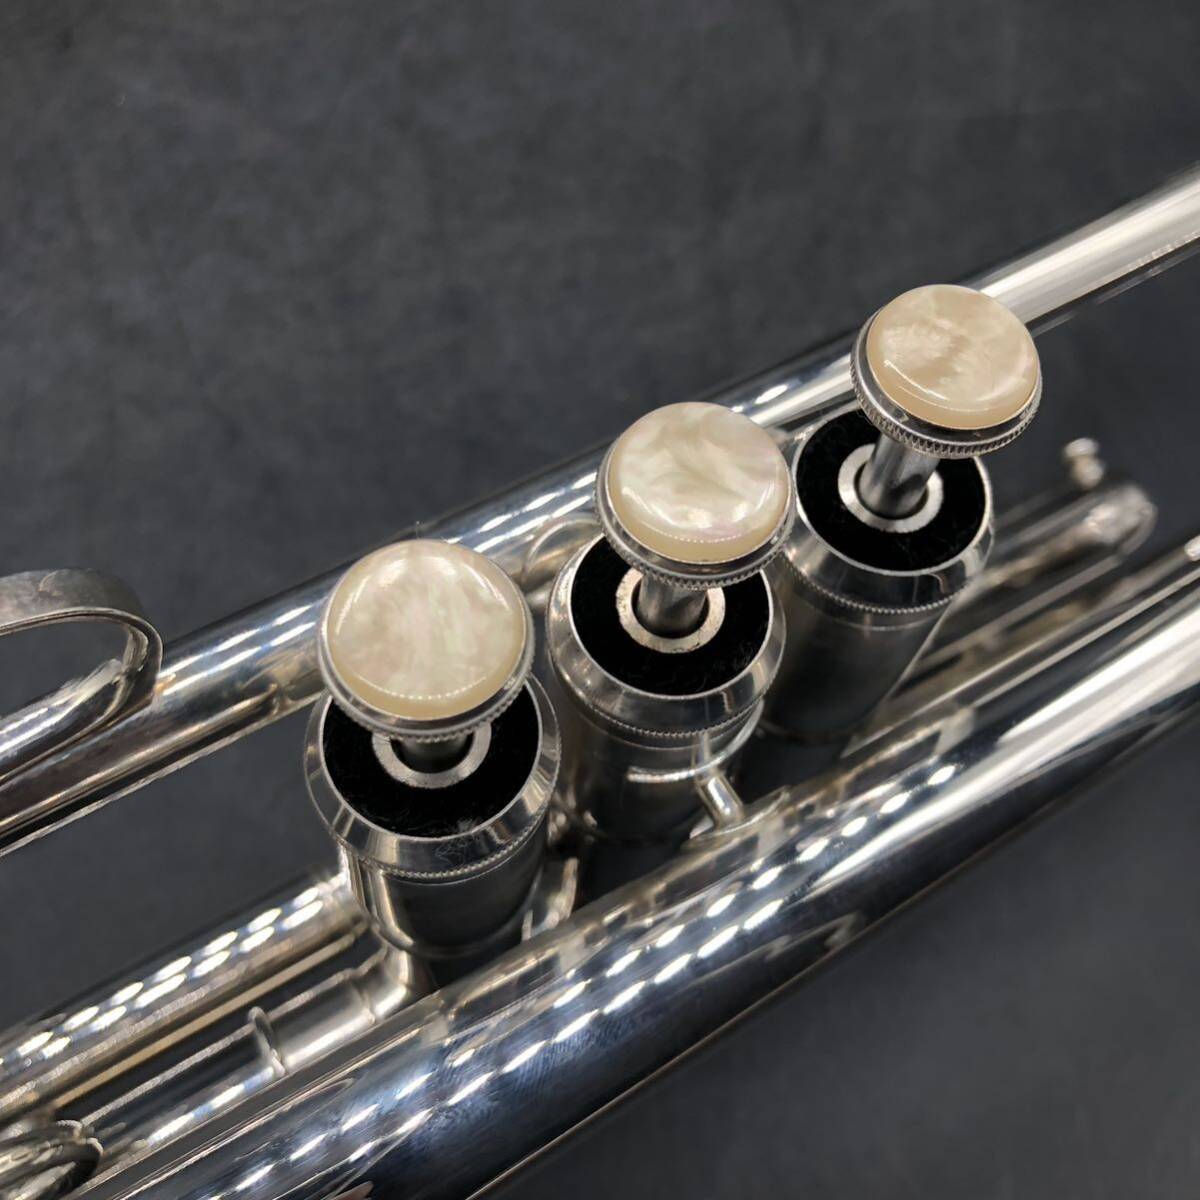 438 Heinrich トランペット IH02018 管楽器 金管楽器 吹奏楽器 音楽 演奏 ケース付 ハードケース付_画像8